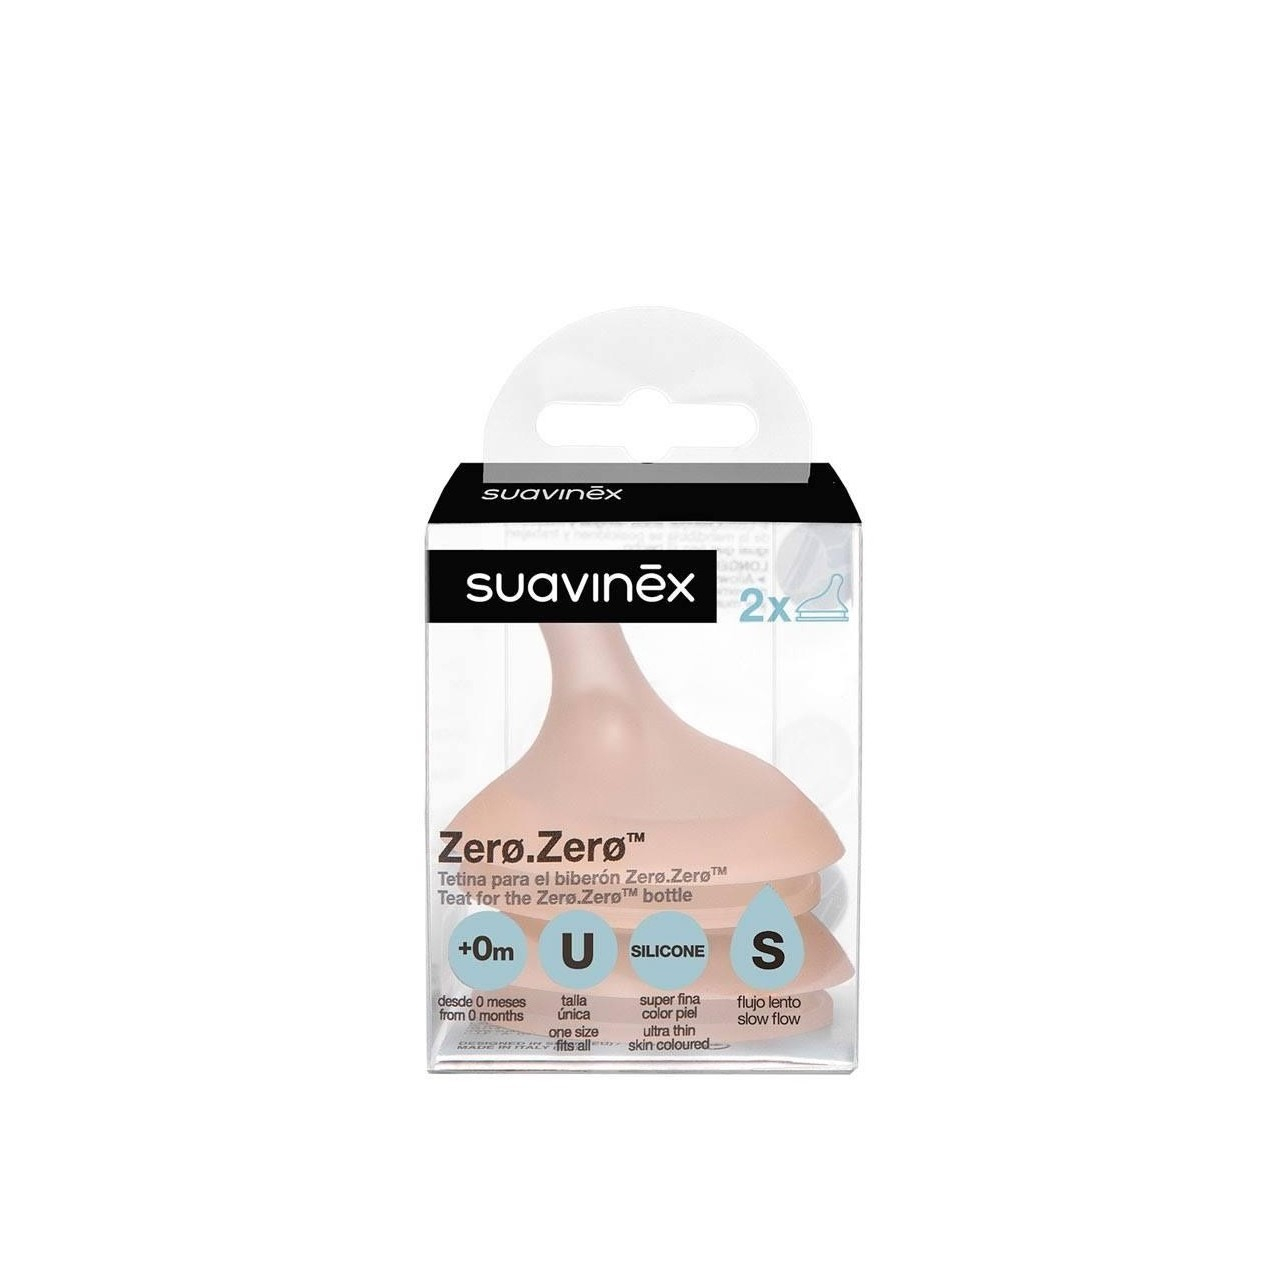 https://static.beautytocare.com/media/catalog/product/s/u/suavinex-zero-zero-anti-colic-flow-s-silicone-nipple-x2.jpg